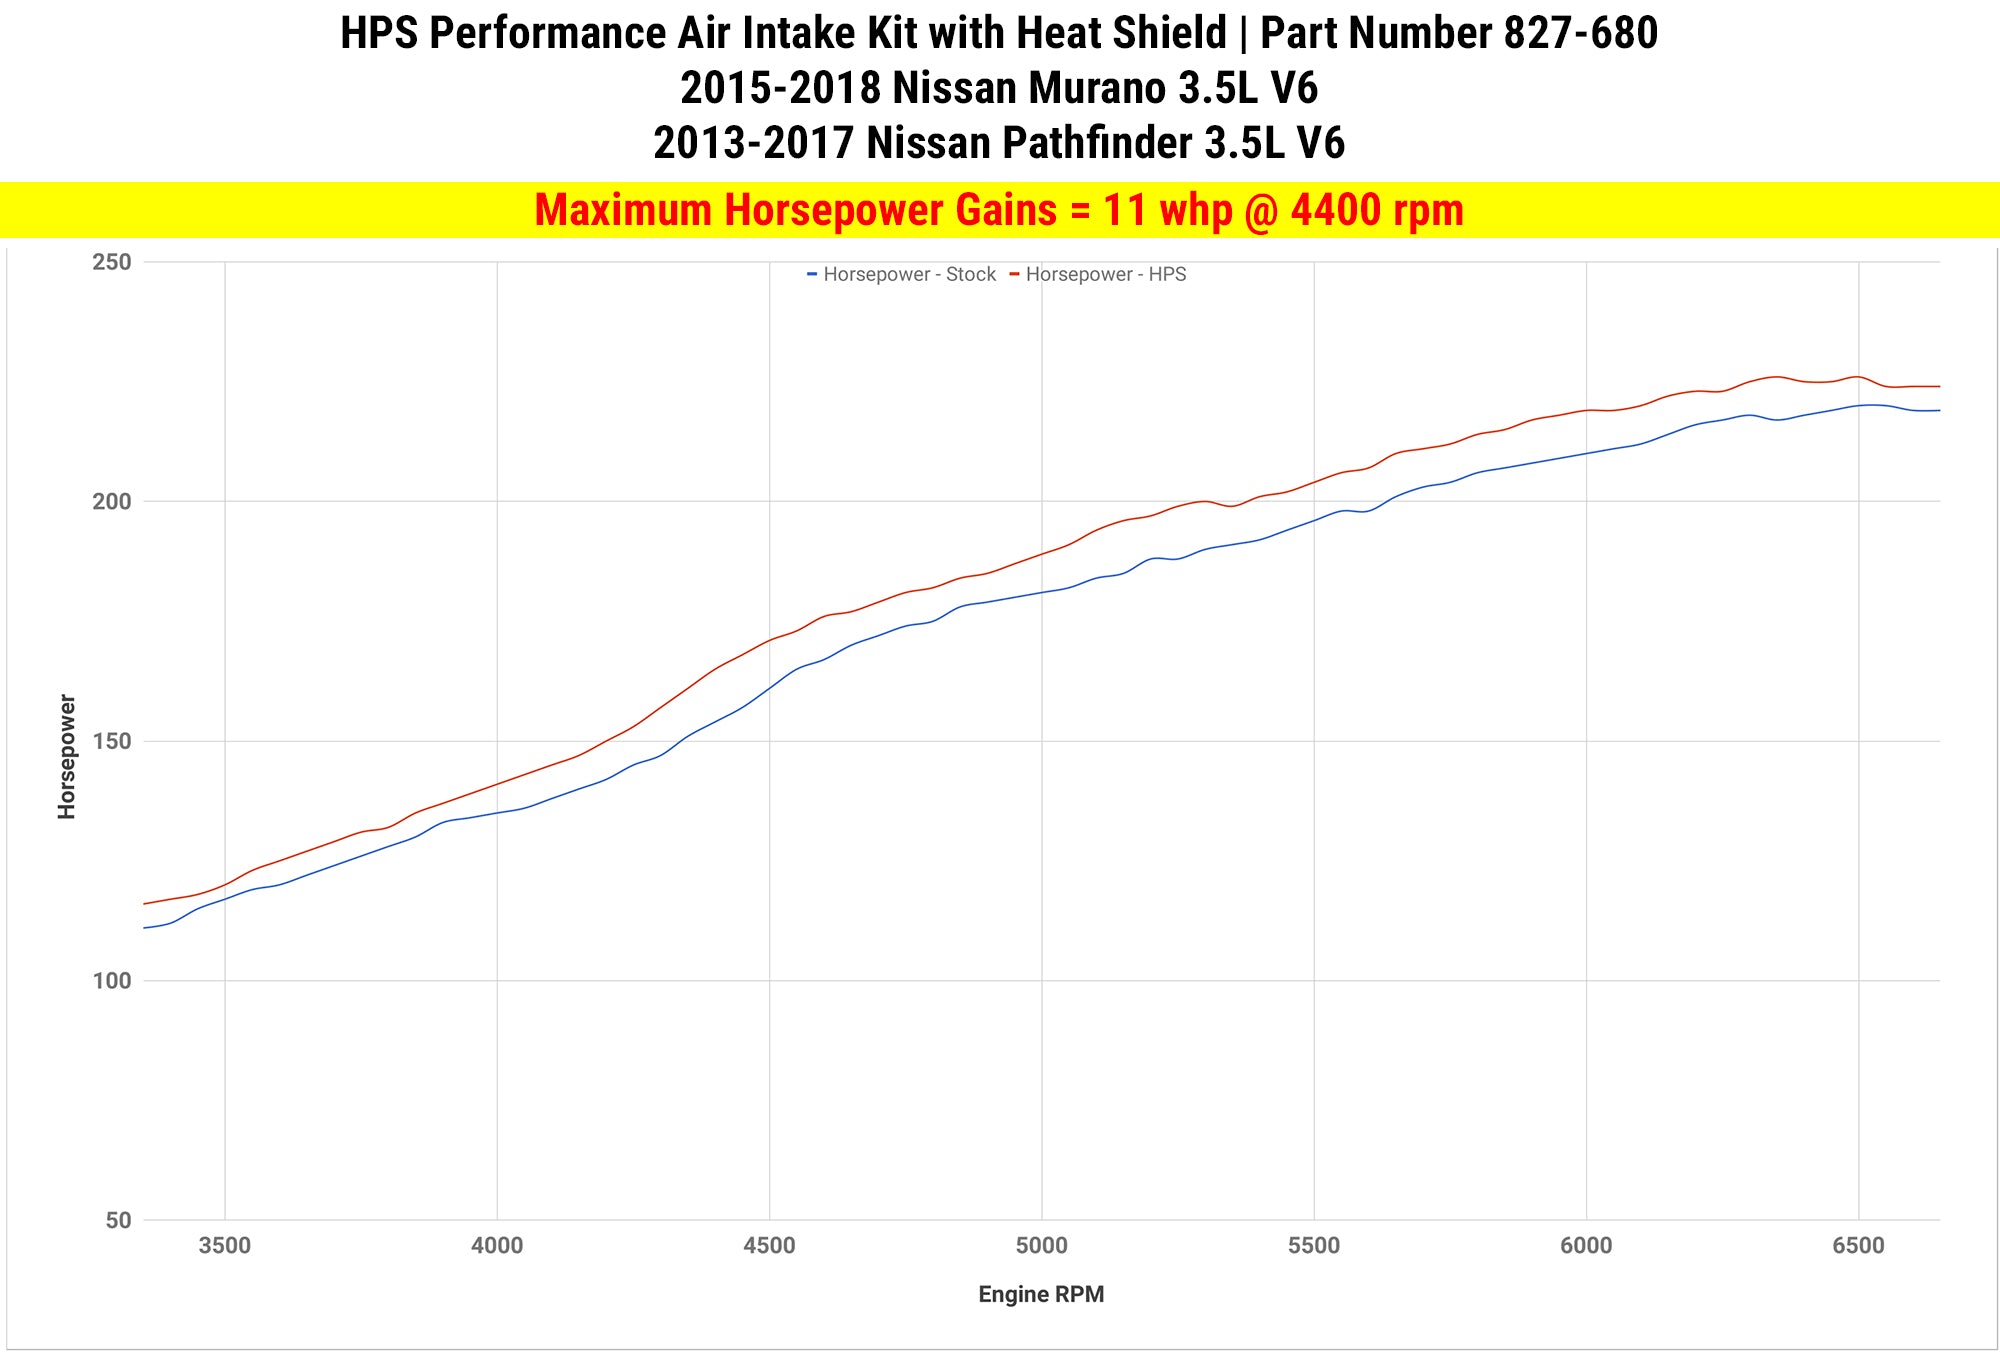 Dyno proven gains 11 whp HPS Performance Shortram Air Intake Kit 2015-2018 Nissan Murano 3.5L V6 827-680R